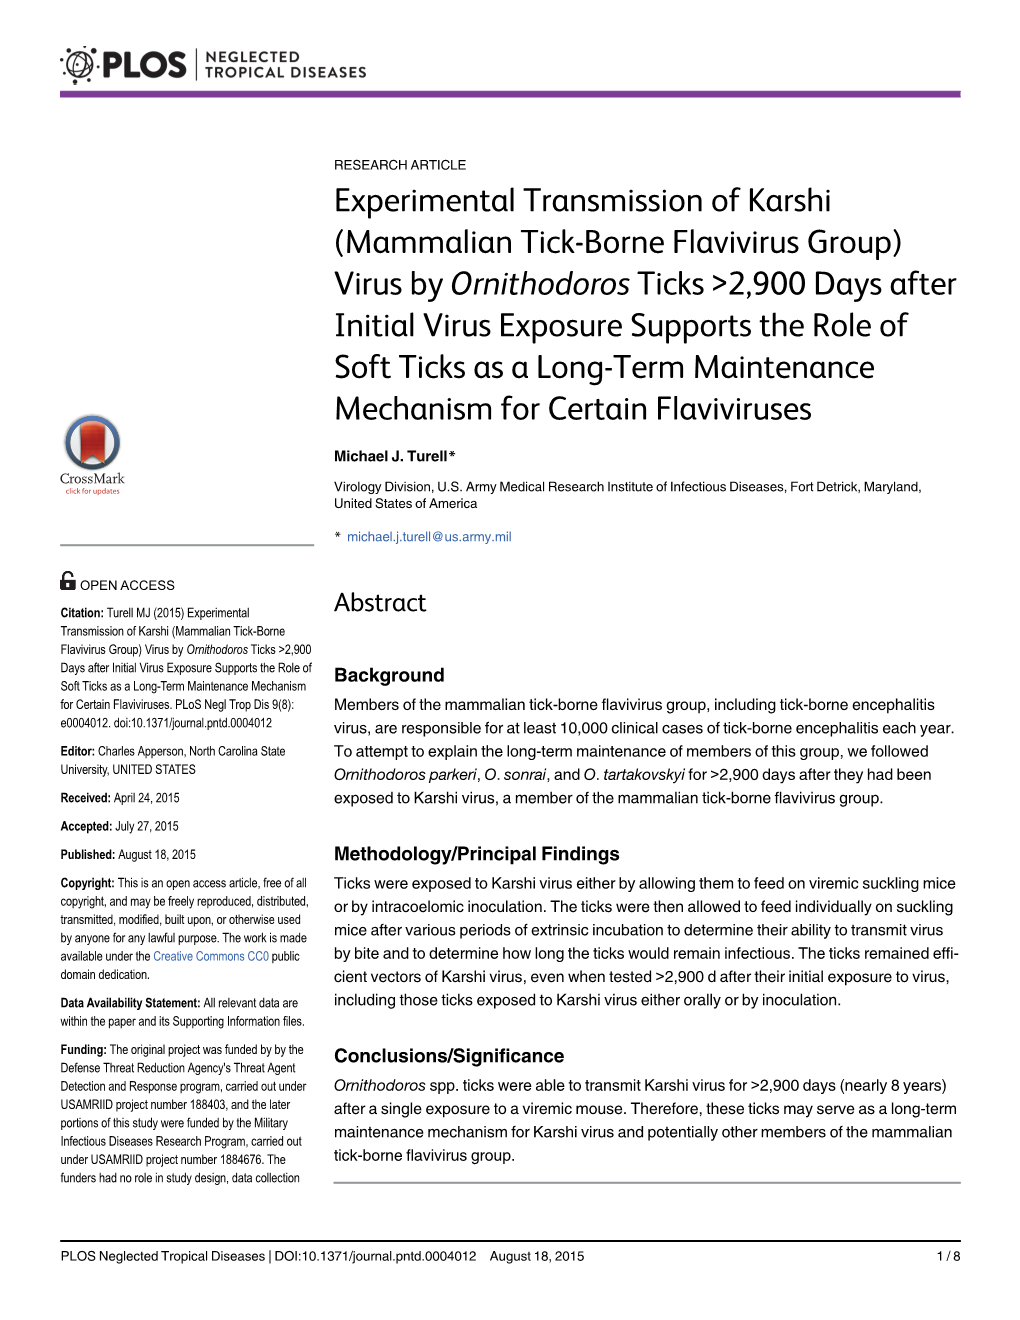 Experimental Transmission of Karshi (Mammalian Tick-Borne Flavivirus